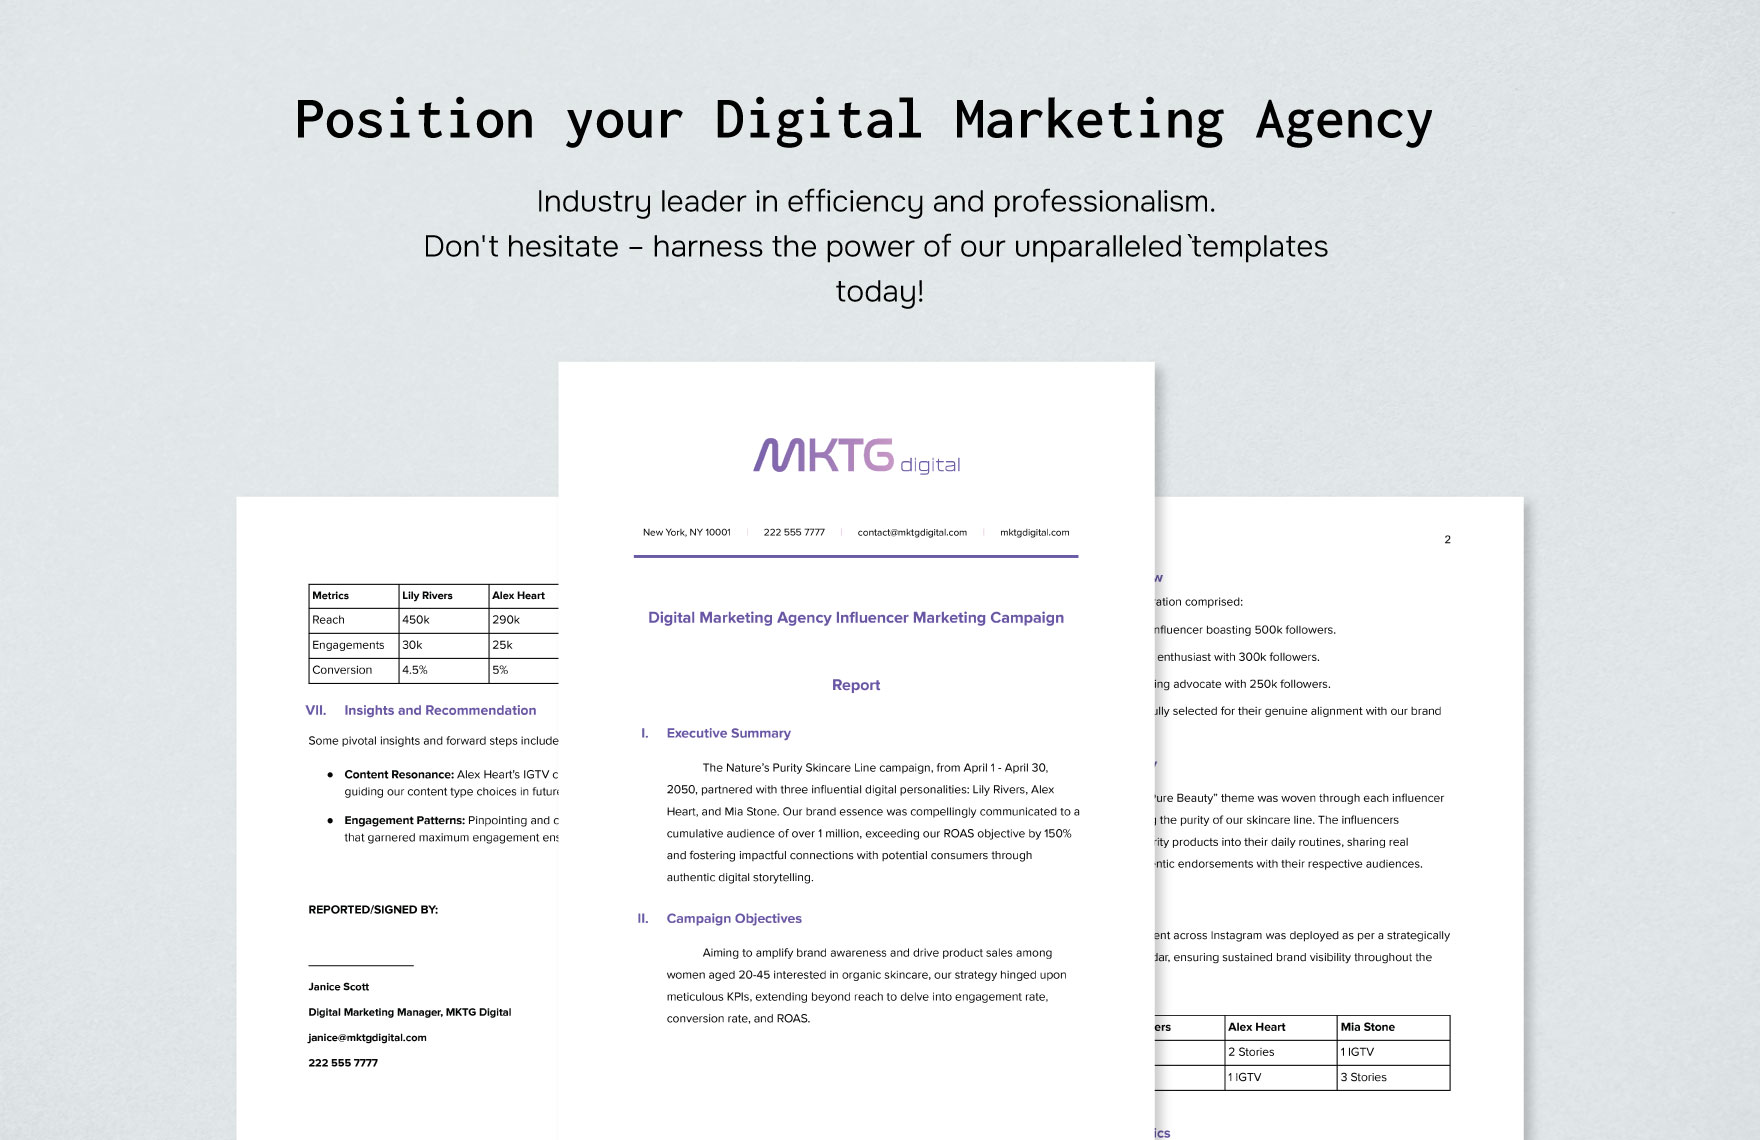 Digital Marketing Agency Influencer Marketing Campaign Report Template